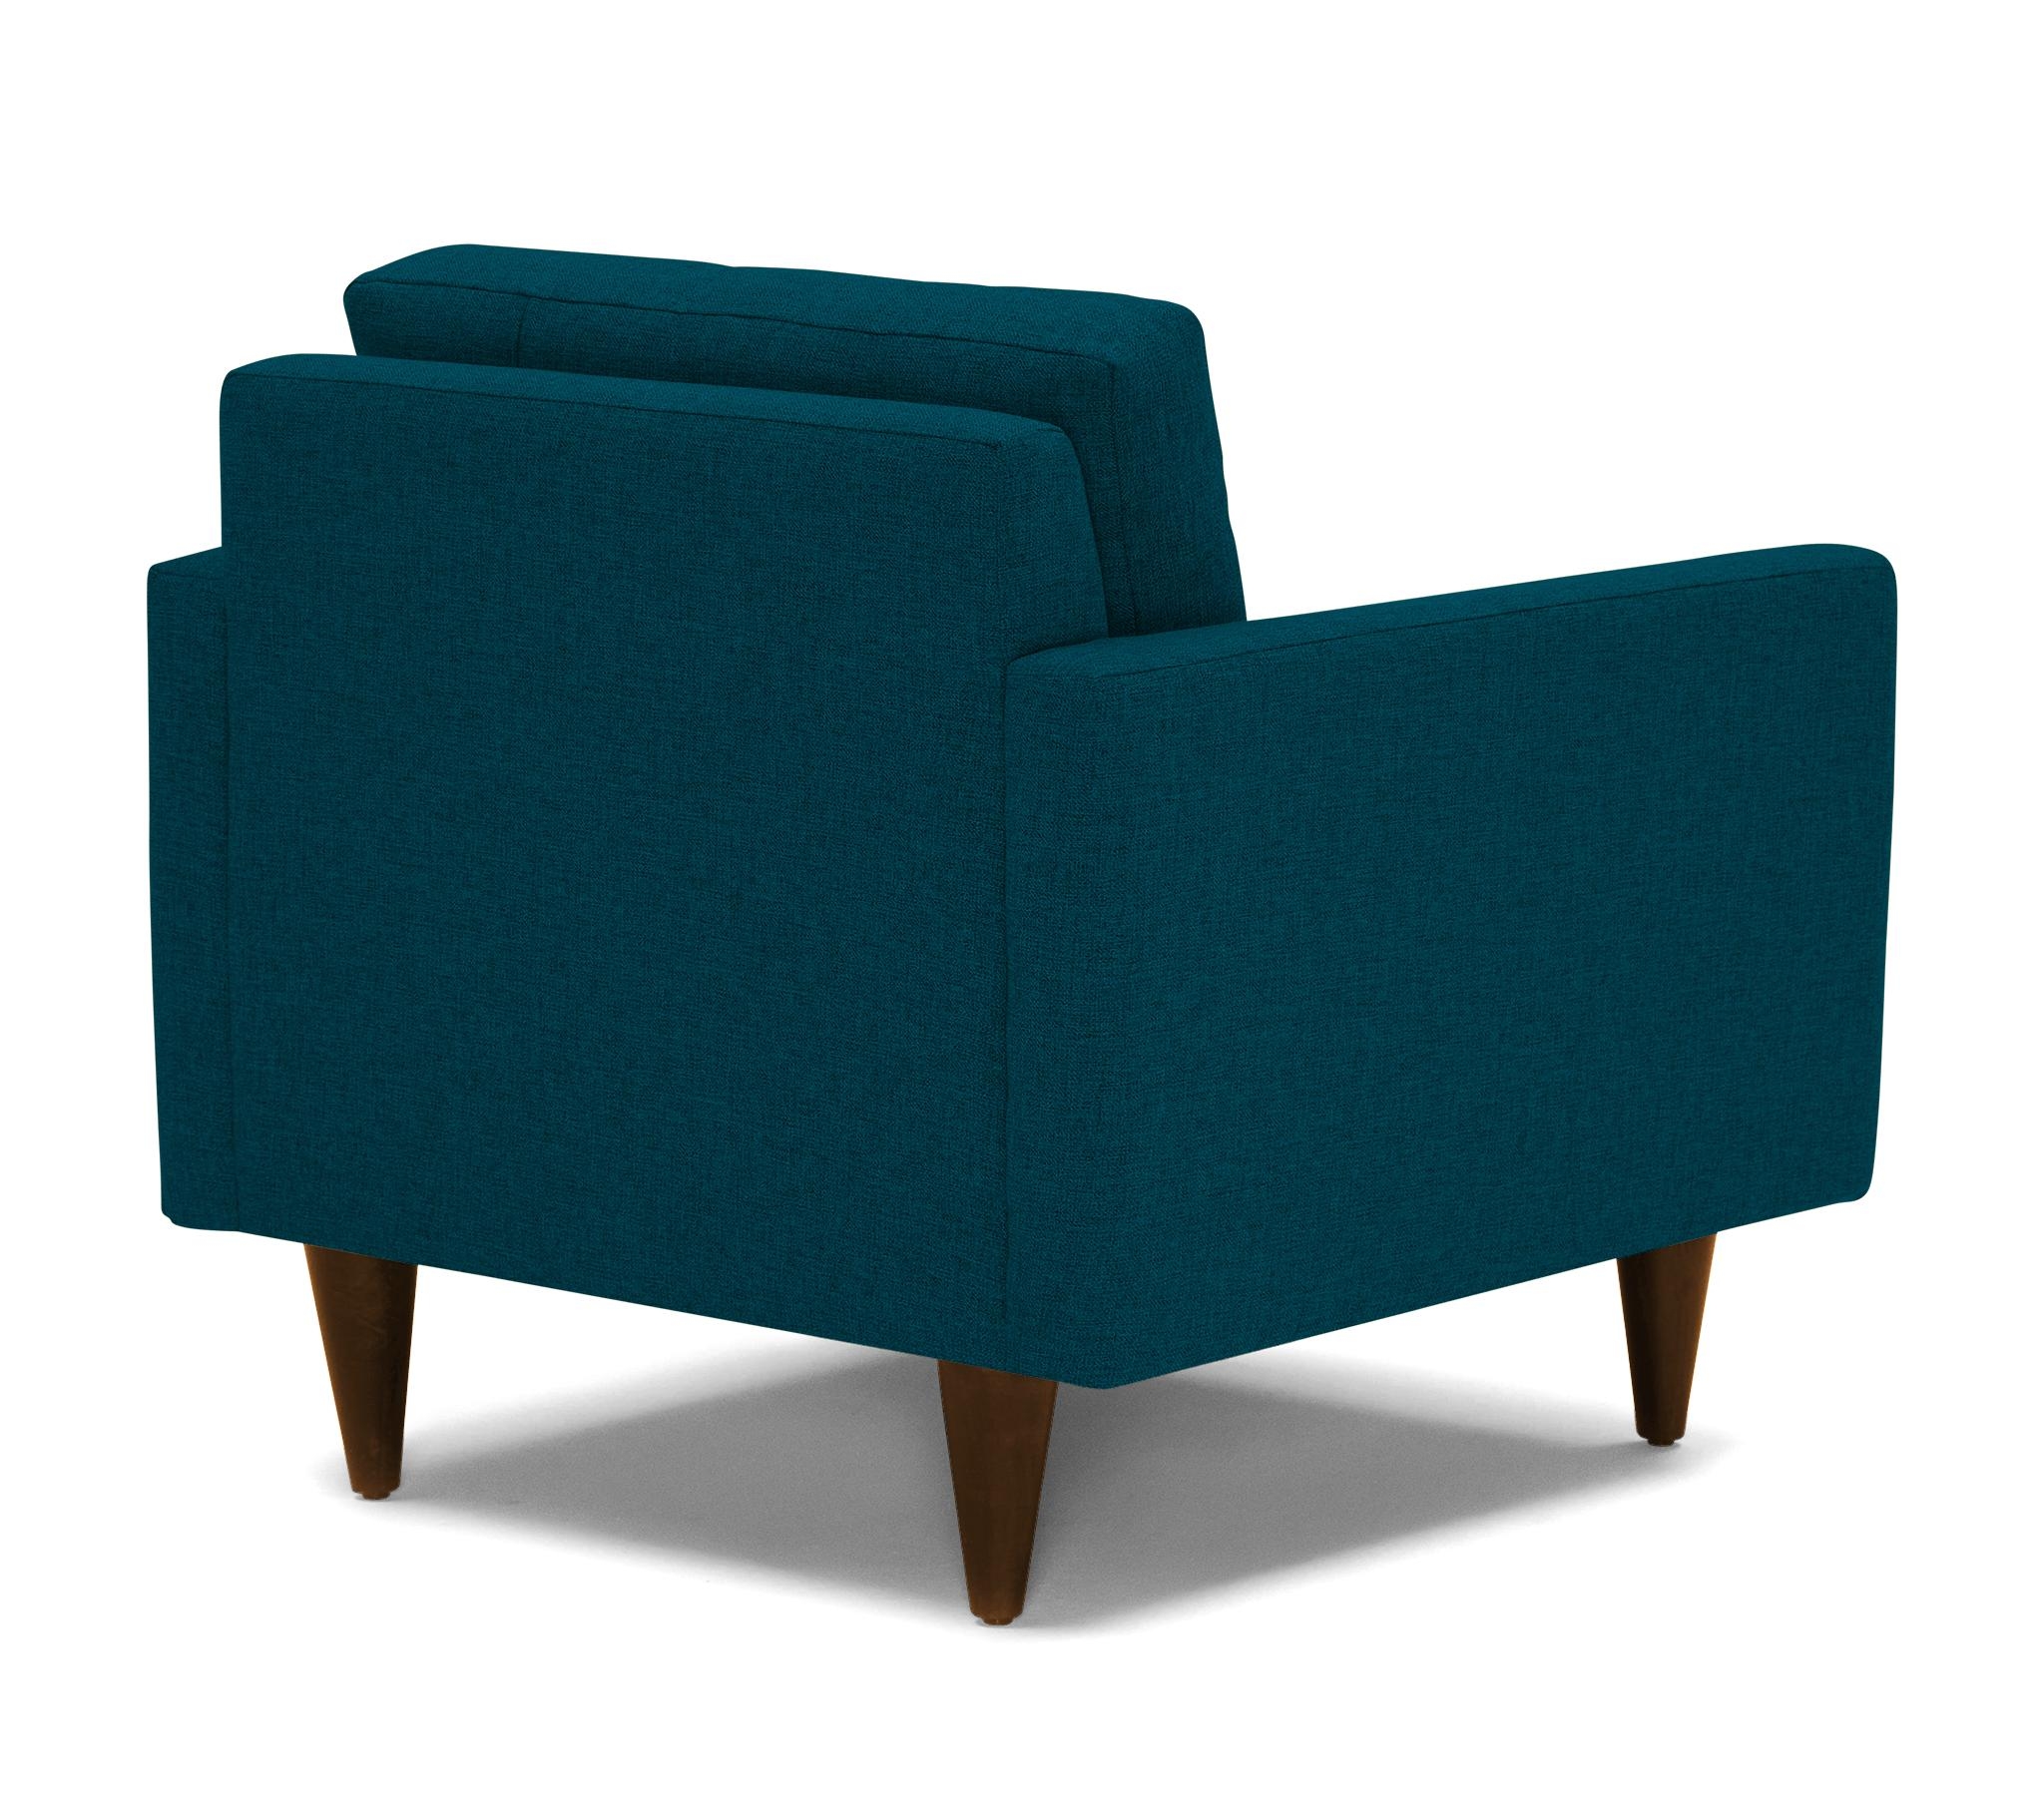 Blue Eliot Mid Century Modern Apartment Chair - Key Largo Zenith Teal - Mocha - Image 3